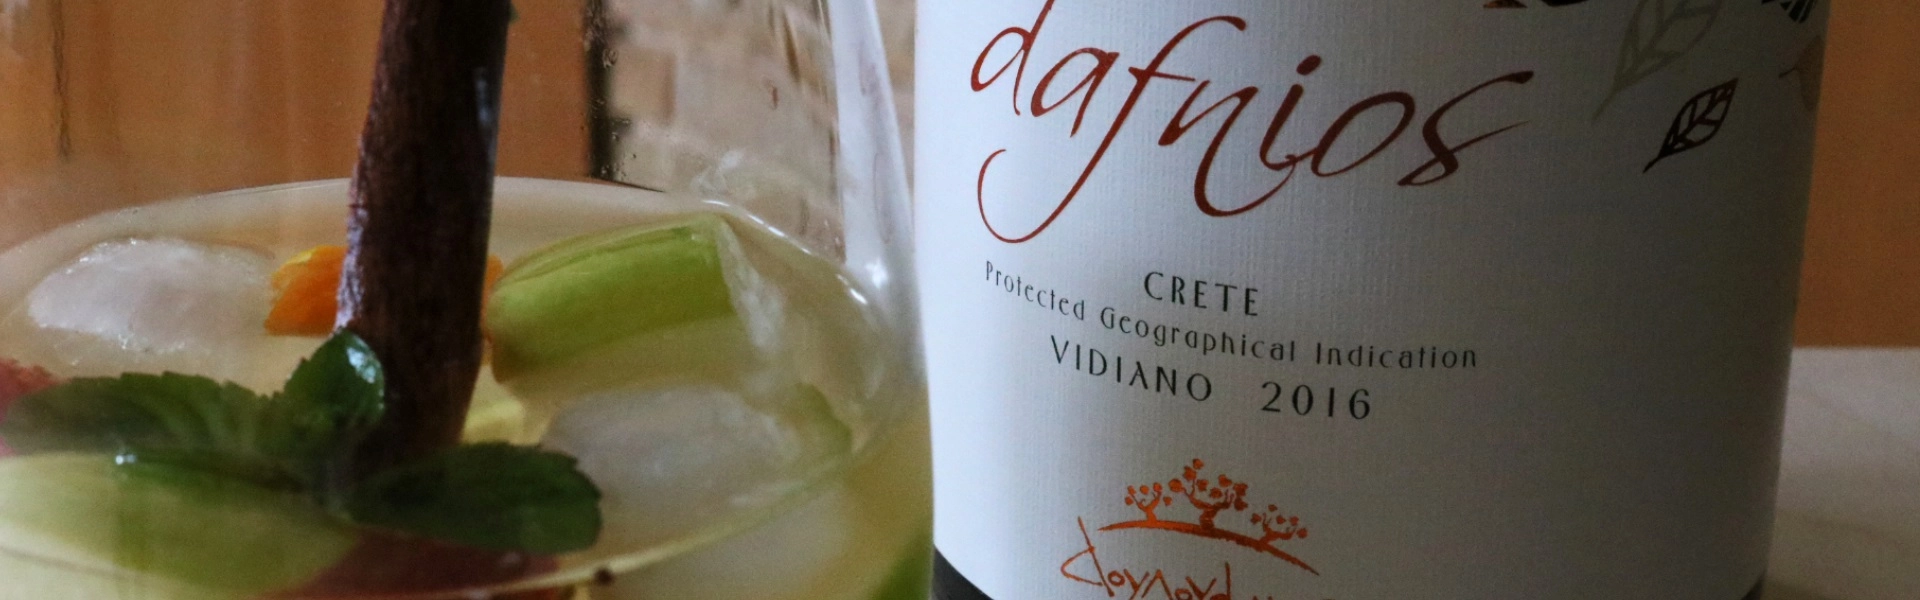 Cocktail recipe with Dafnios White wine from Vidiano, Crete